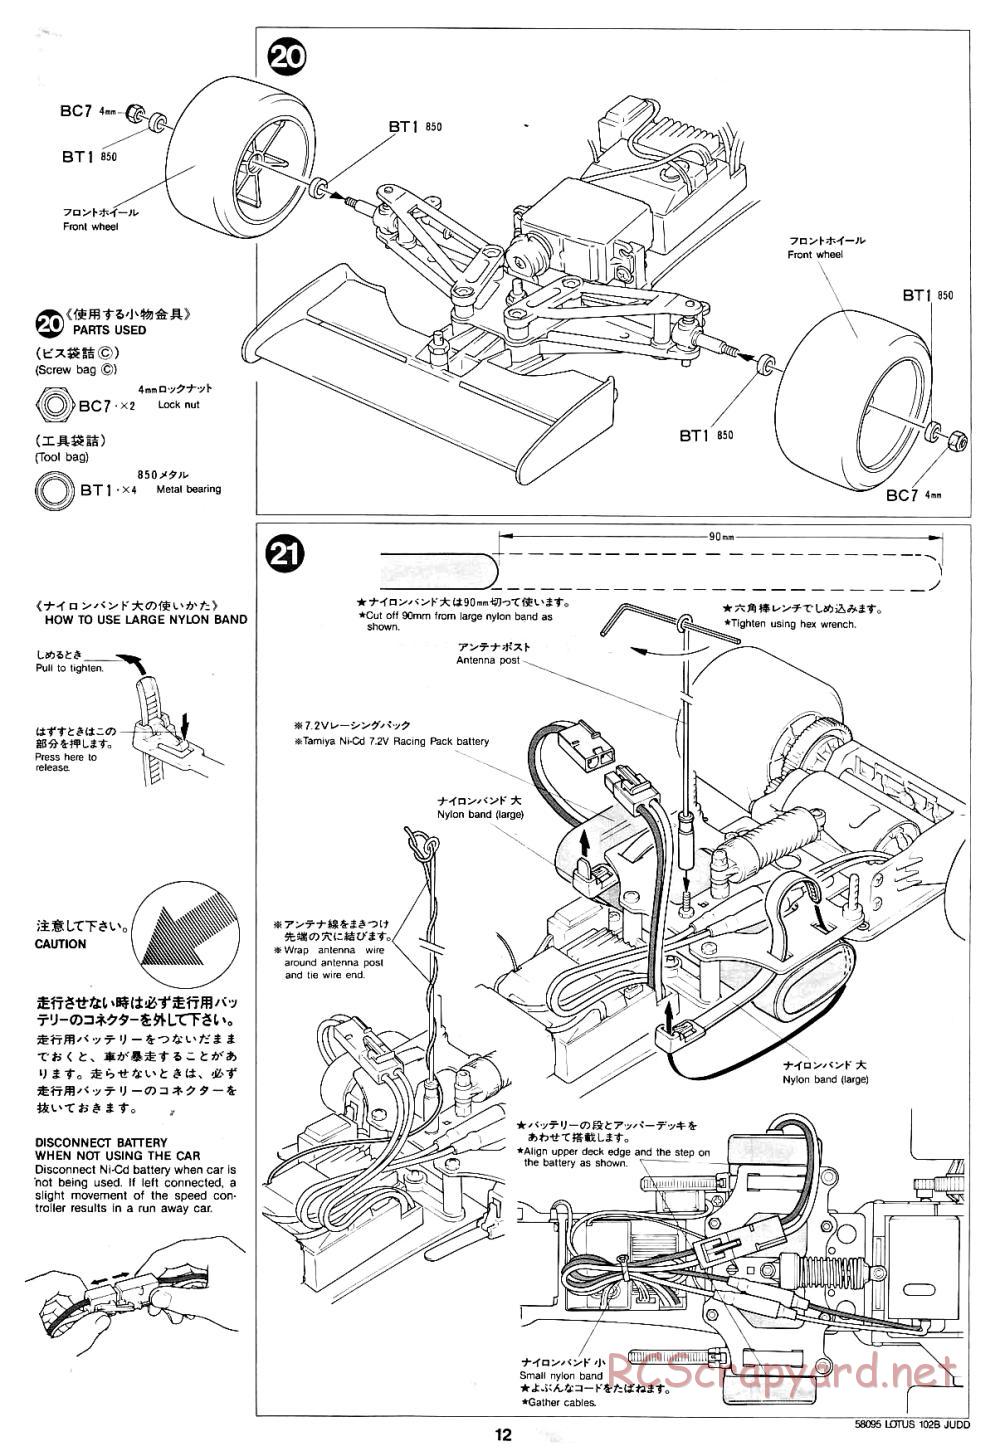 Tamiya - Lotus 102B Judd - 58095 - Manual - Page 12